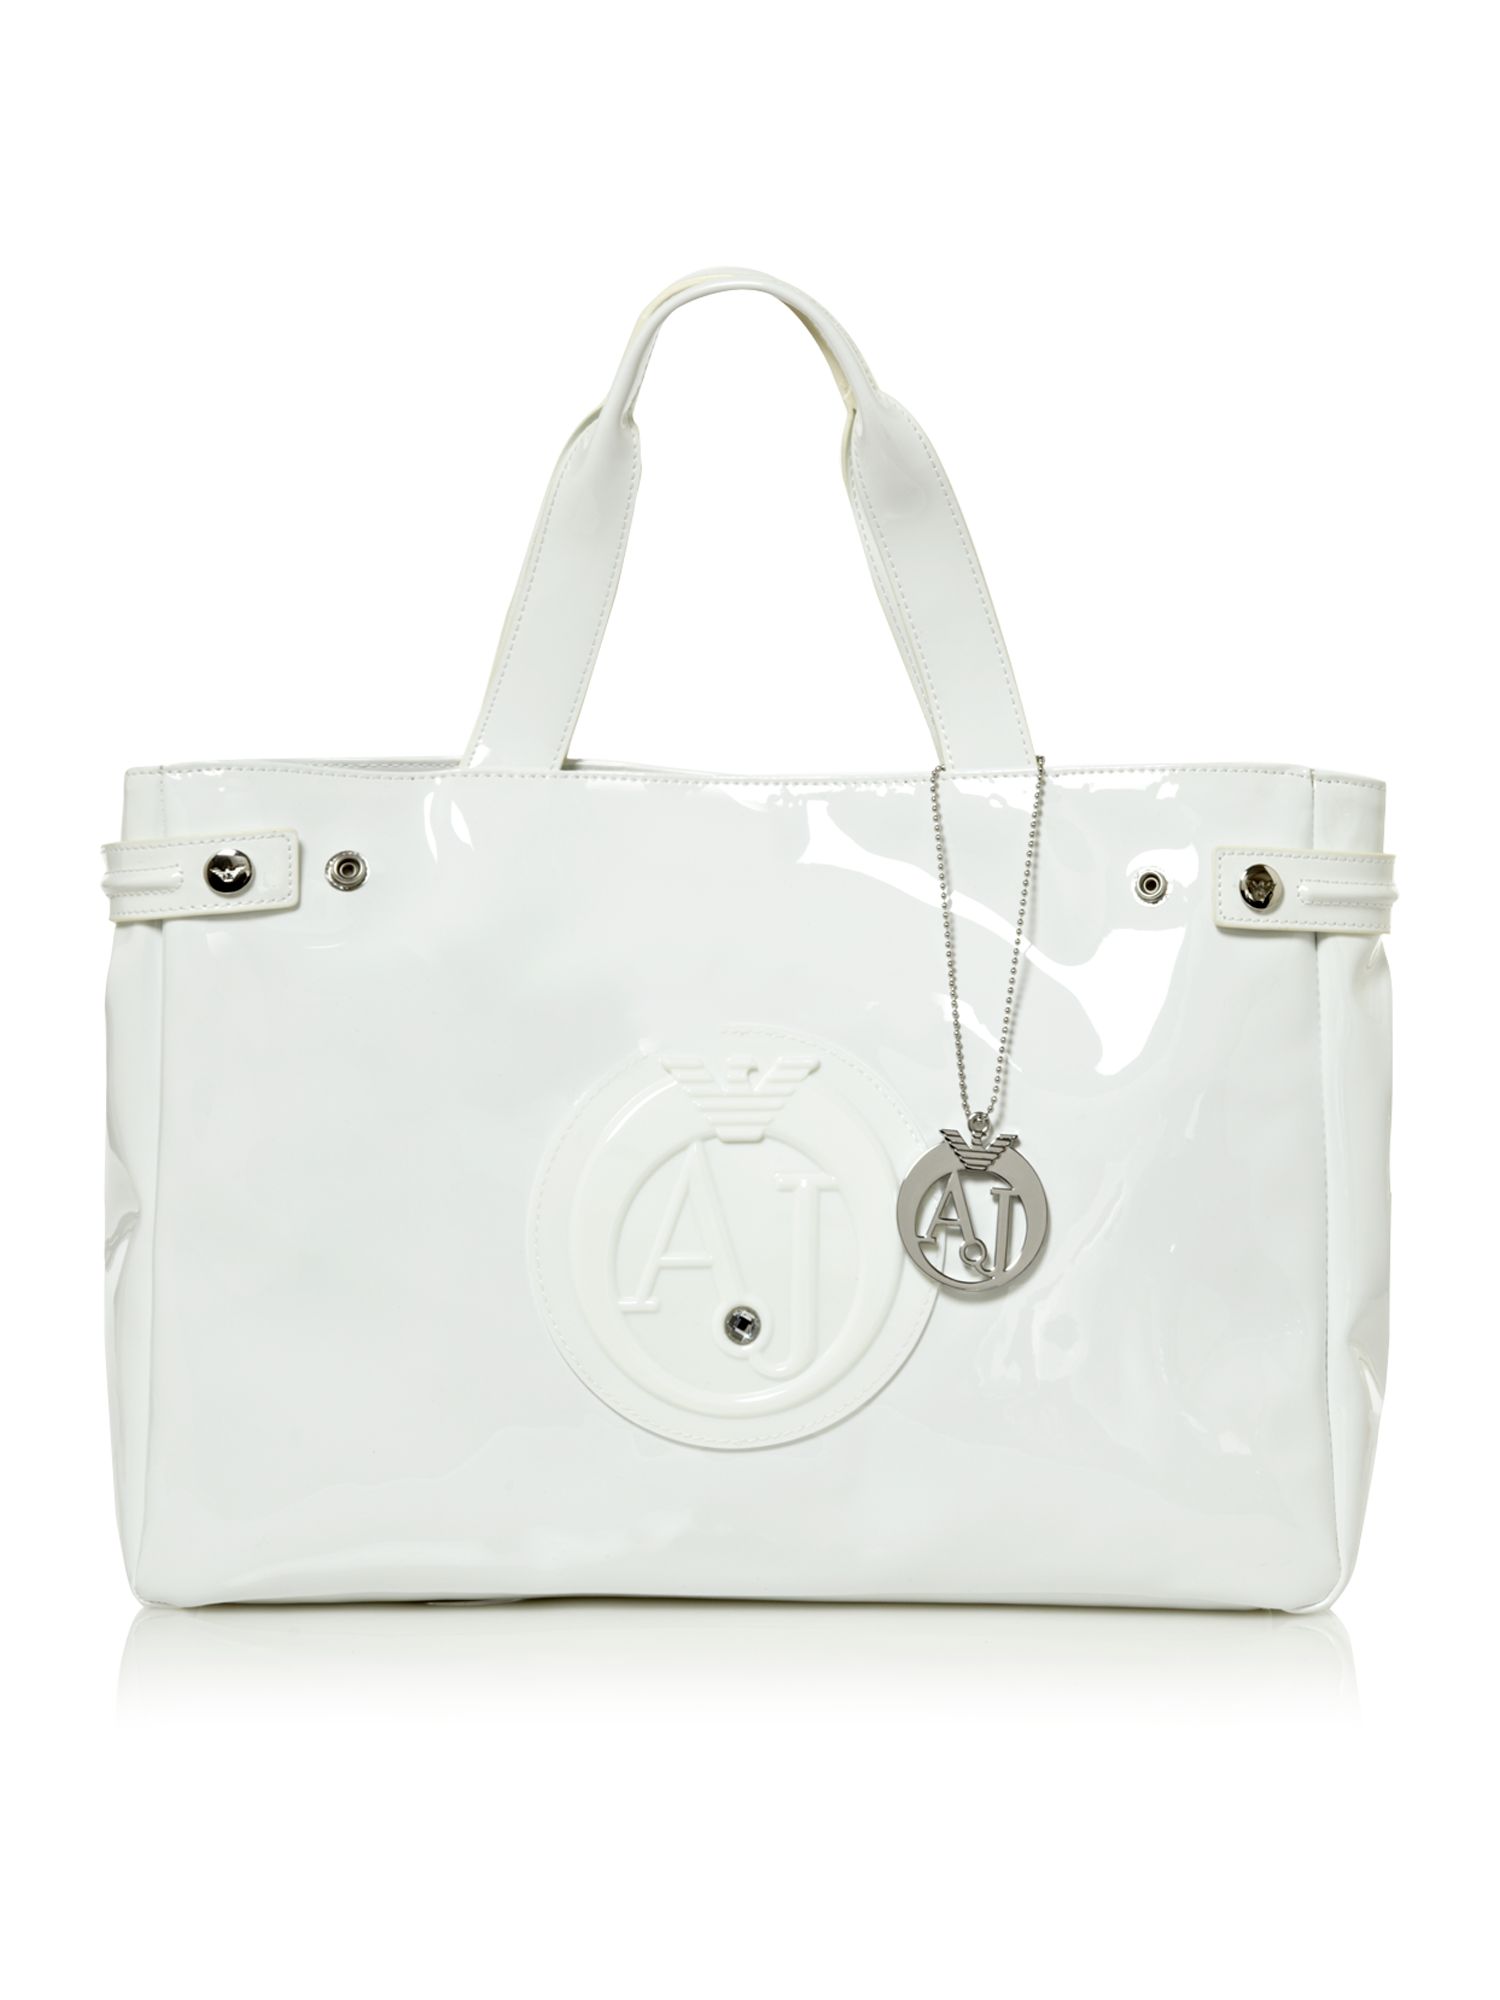 Armani Jeans White Patent Tote Bag in White | Lyst